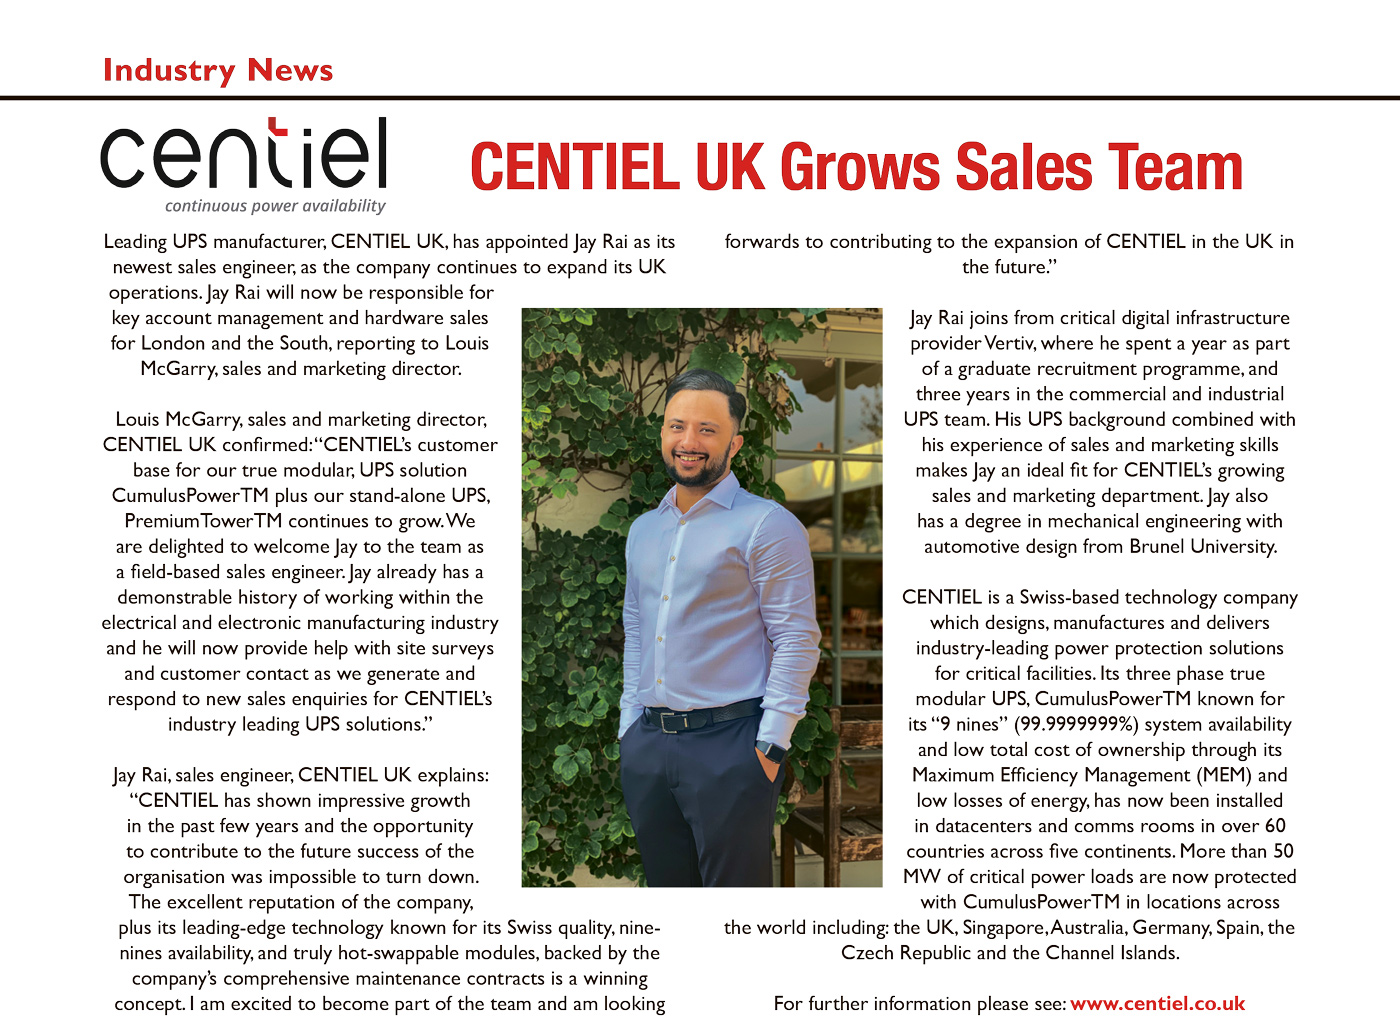 CENTIEL UK Grows Sales Team